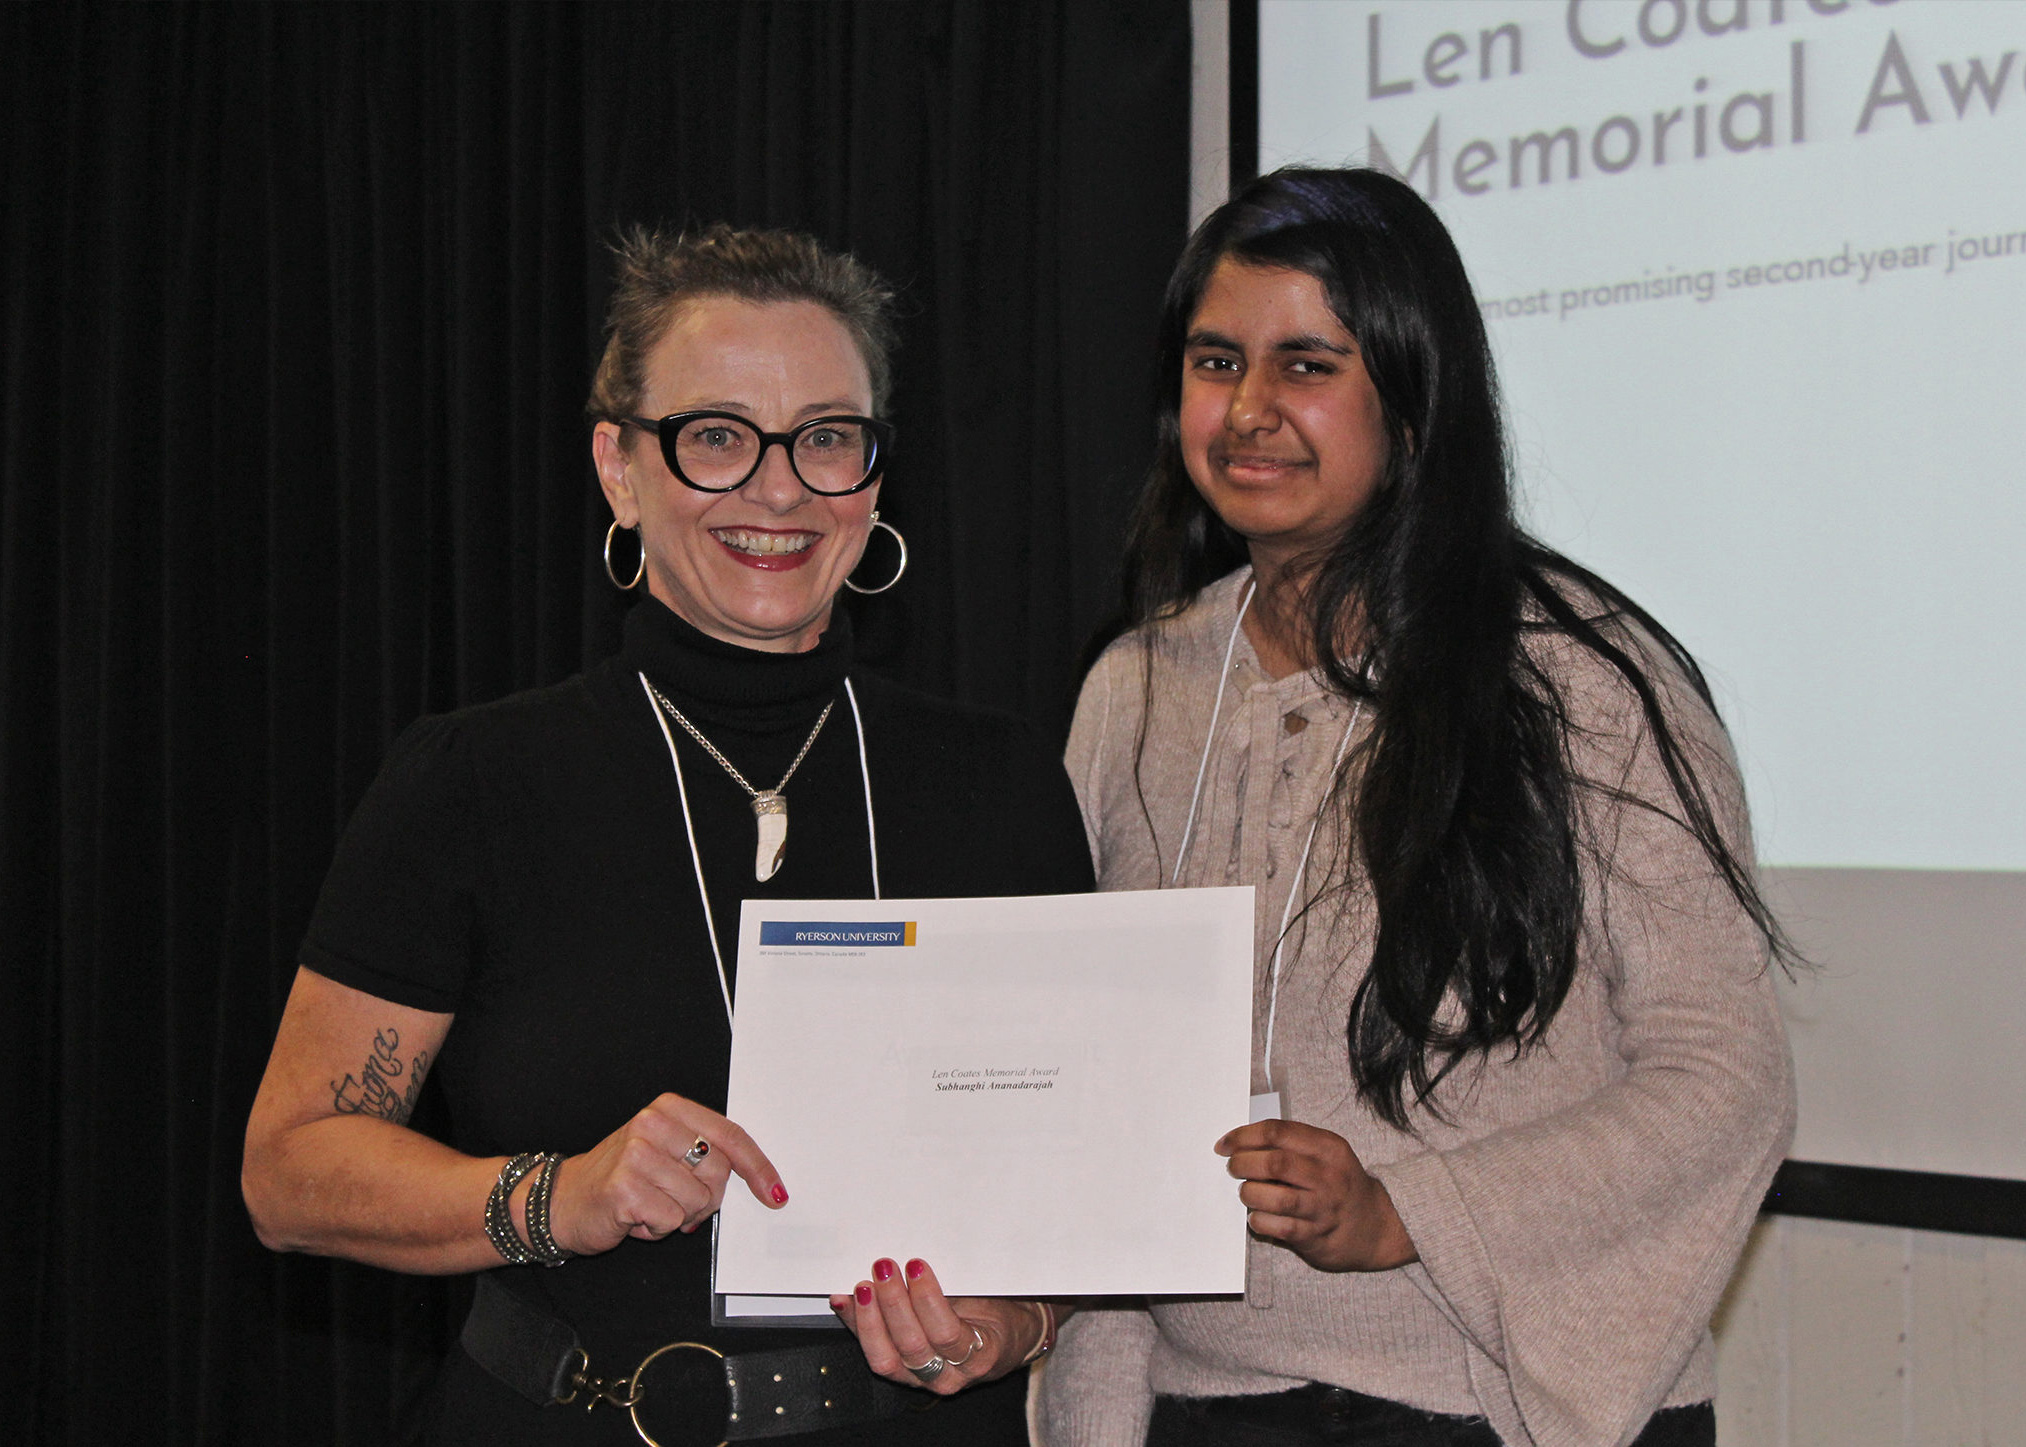 Len Coates Memorial Award presenter Alison Campbell with second-year recipient Subhanghi Ananadarajah.